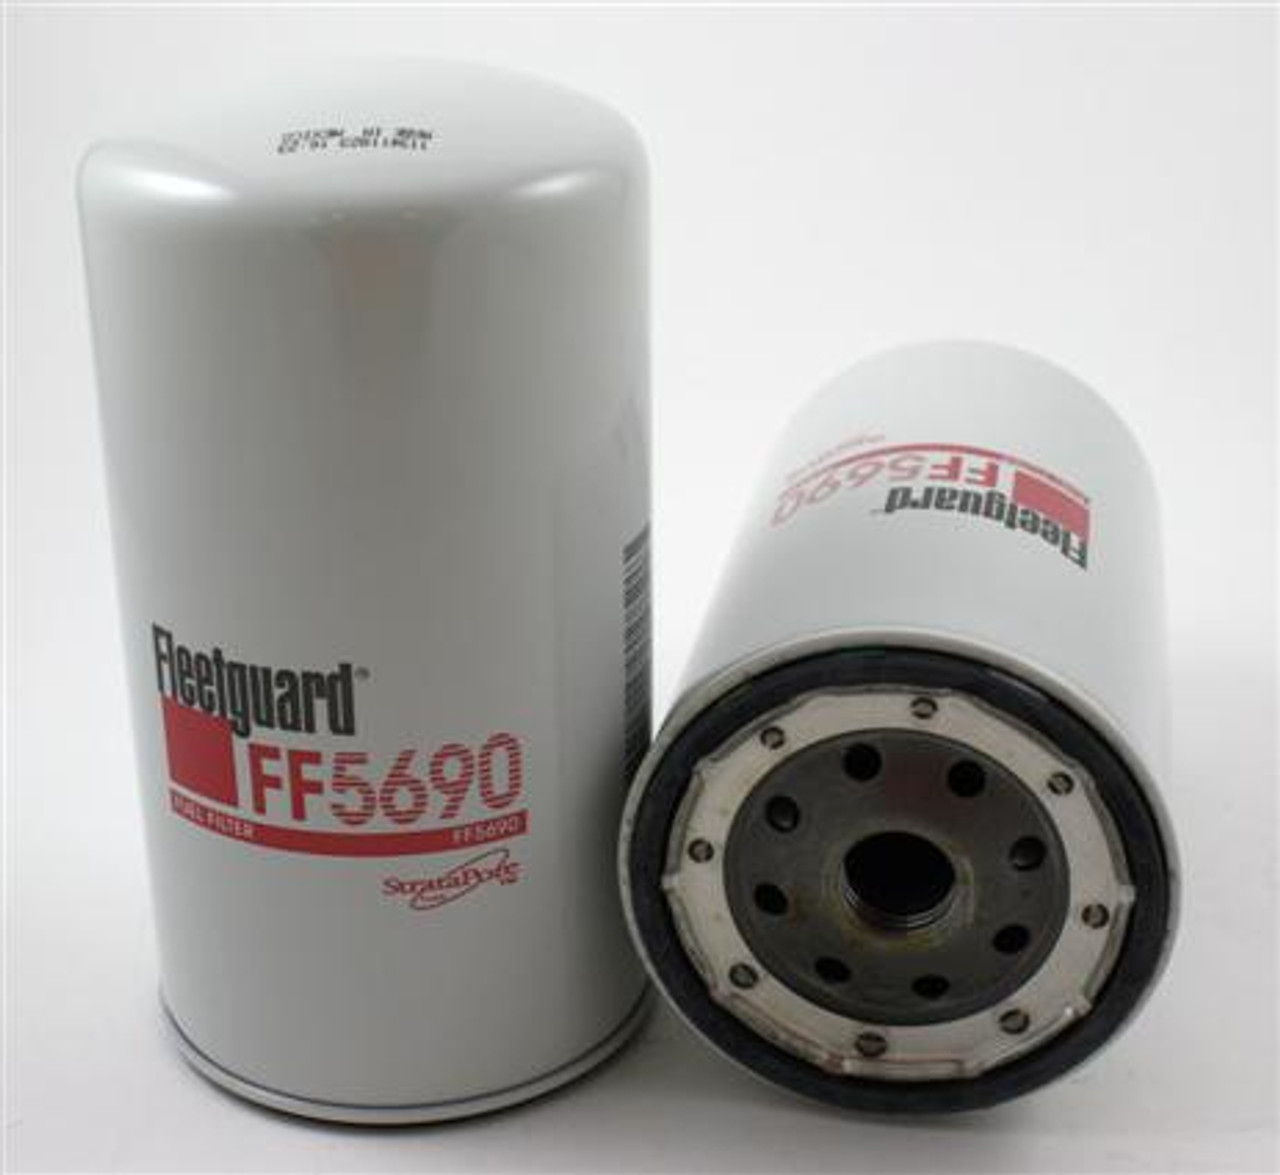 FF5690: Fleetguard Fuel Filter